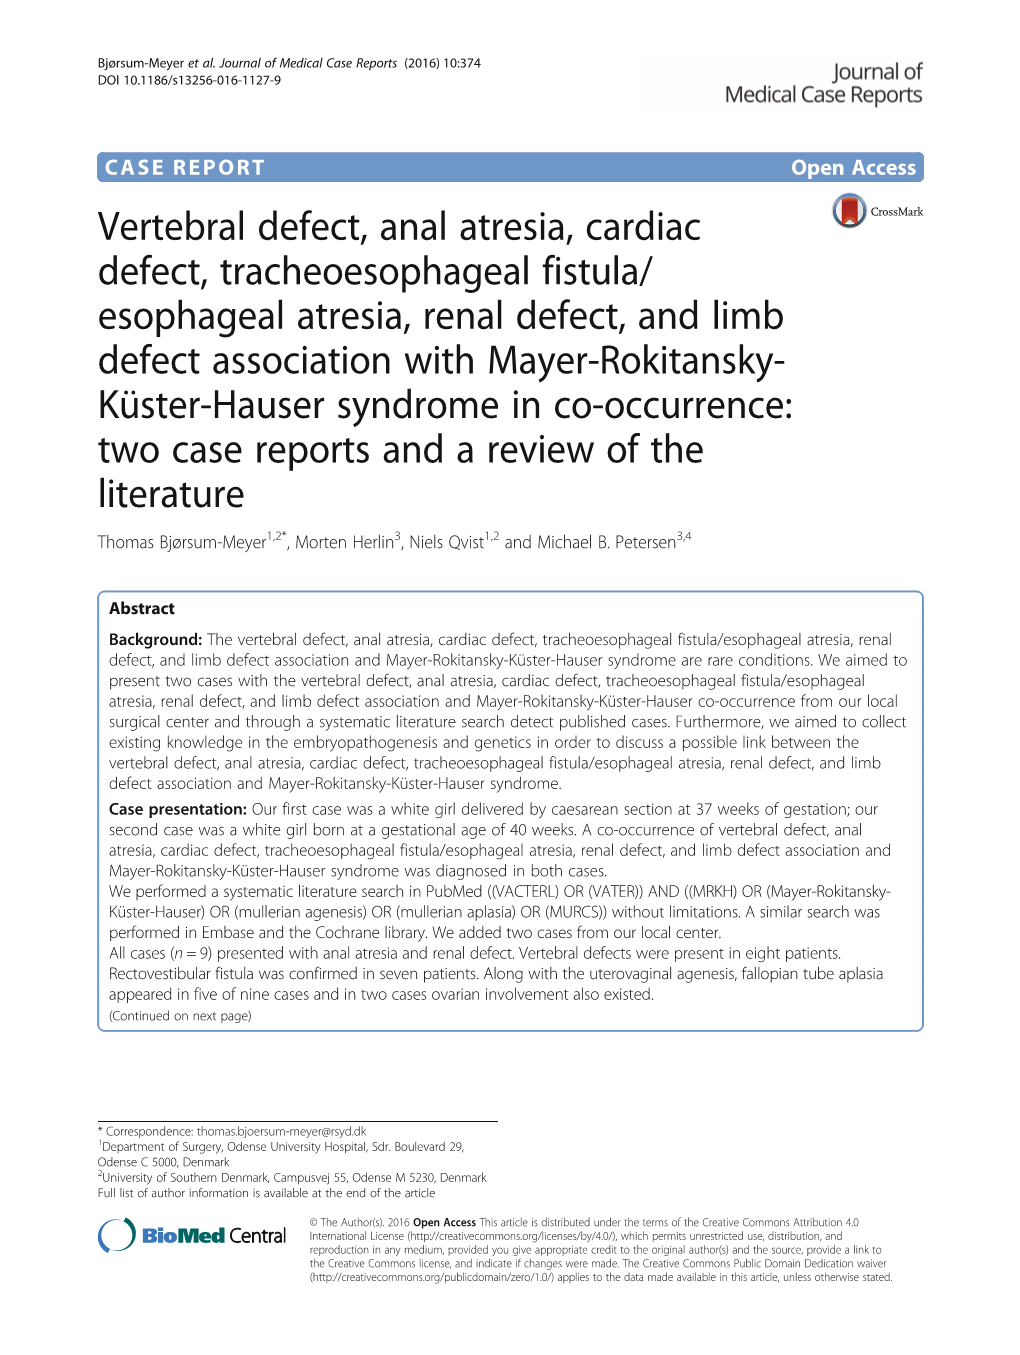 Vertebral Defect, Anal Atresia, Cardiac